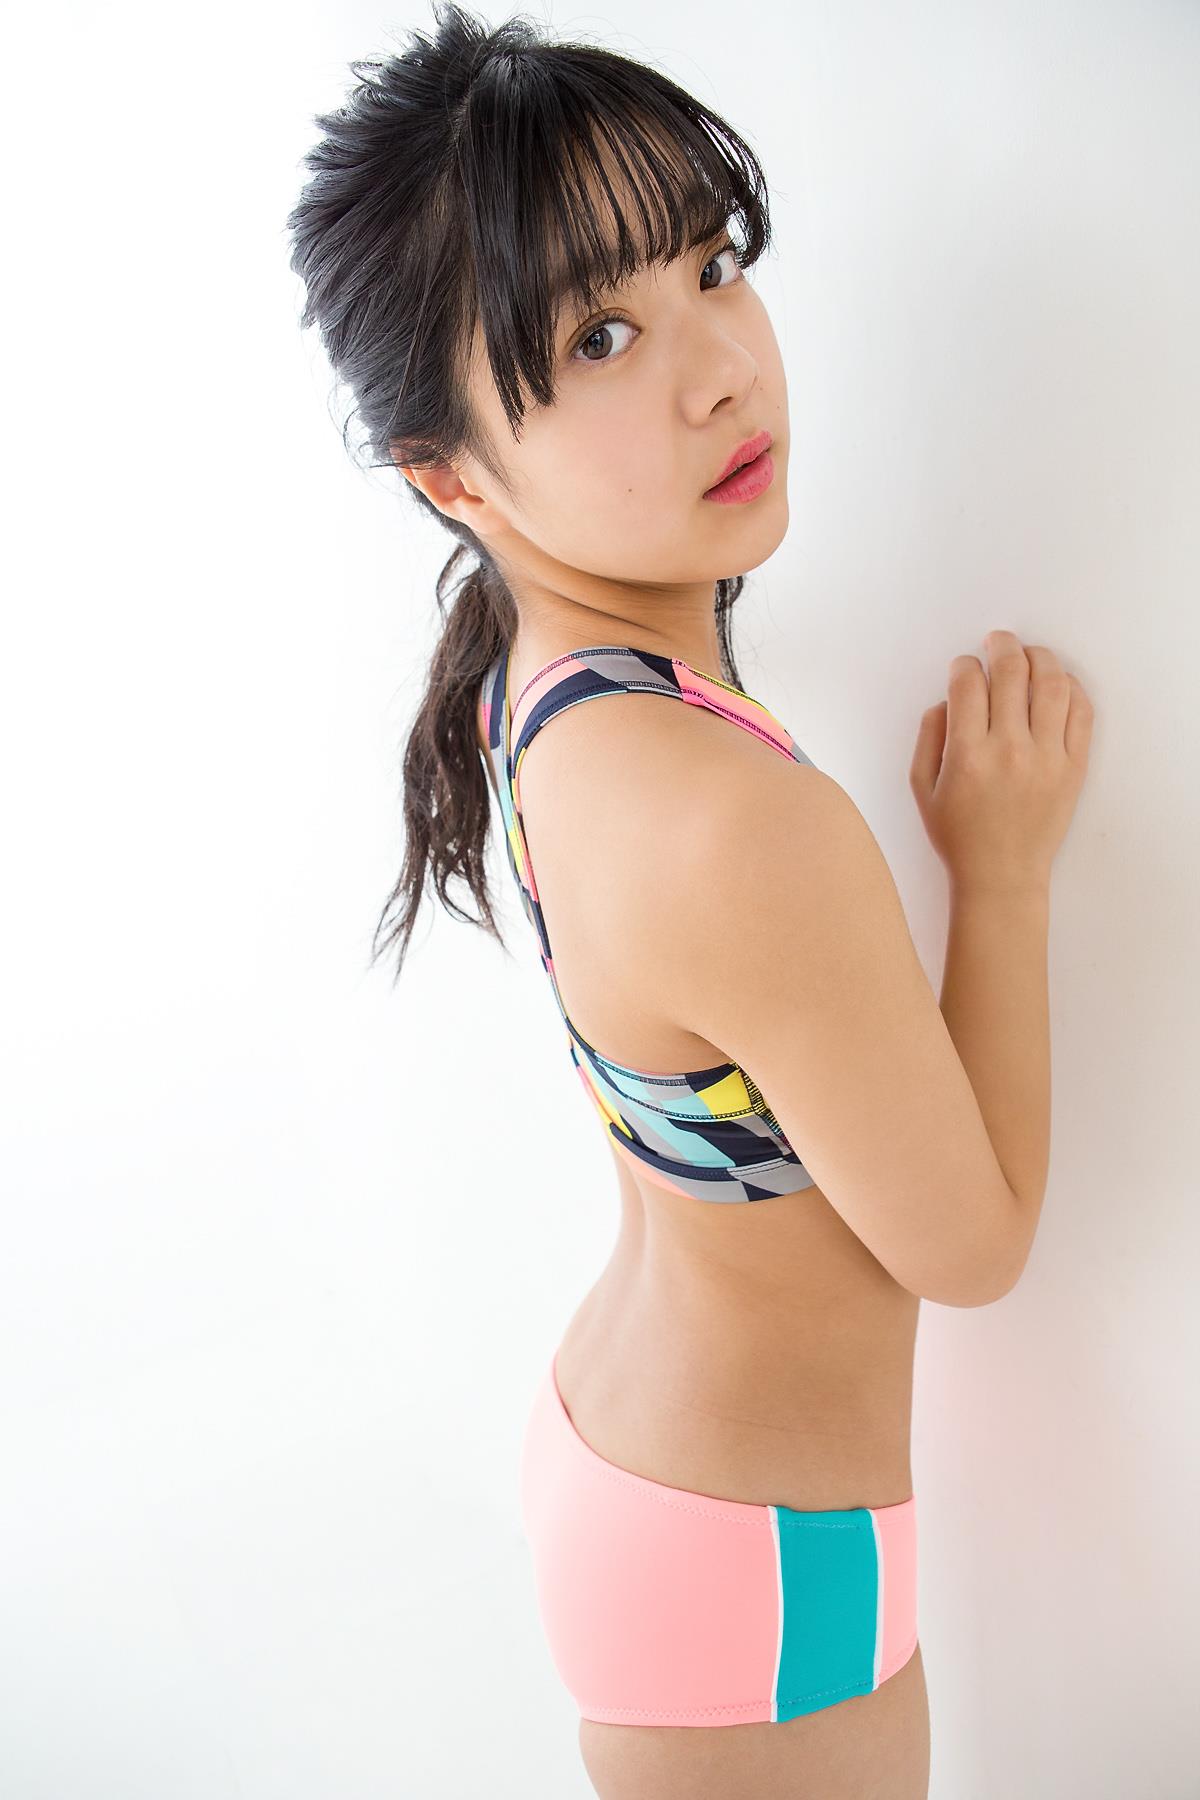 Minisuka.tv Saria Natsume 夏目咲莉愛 Premium Gallery 04 - 30.jpg